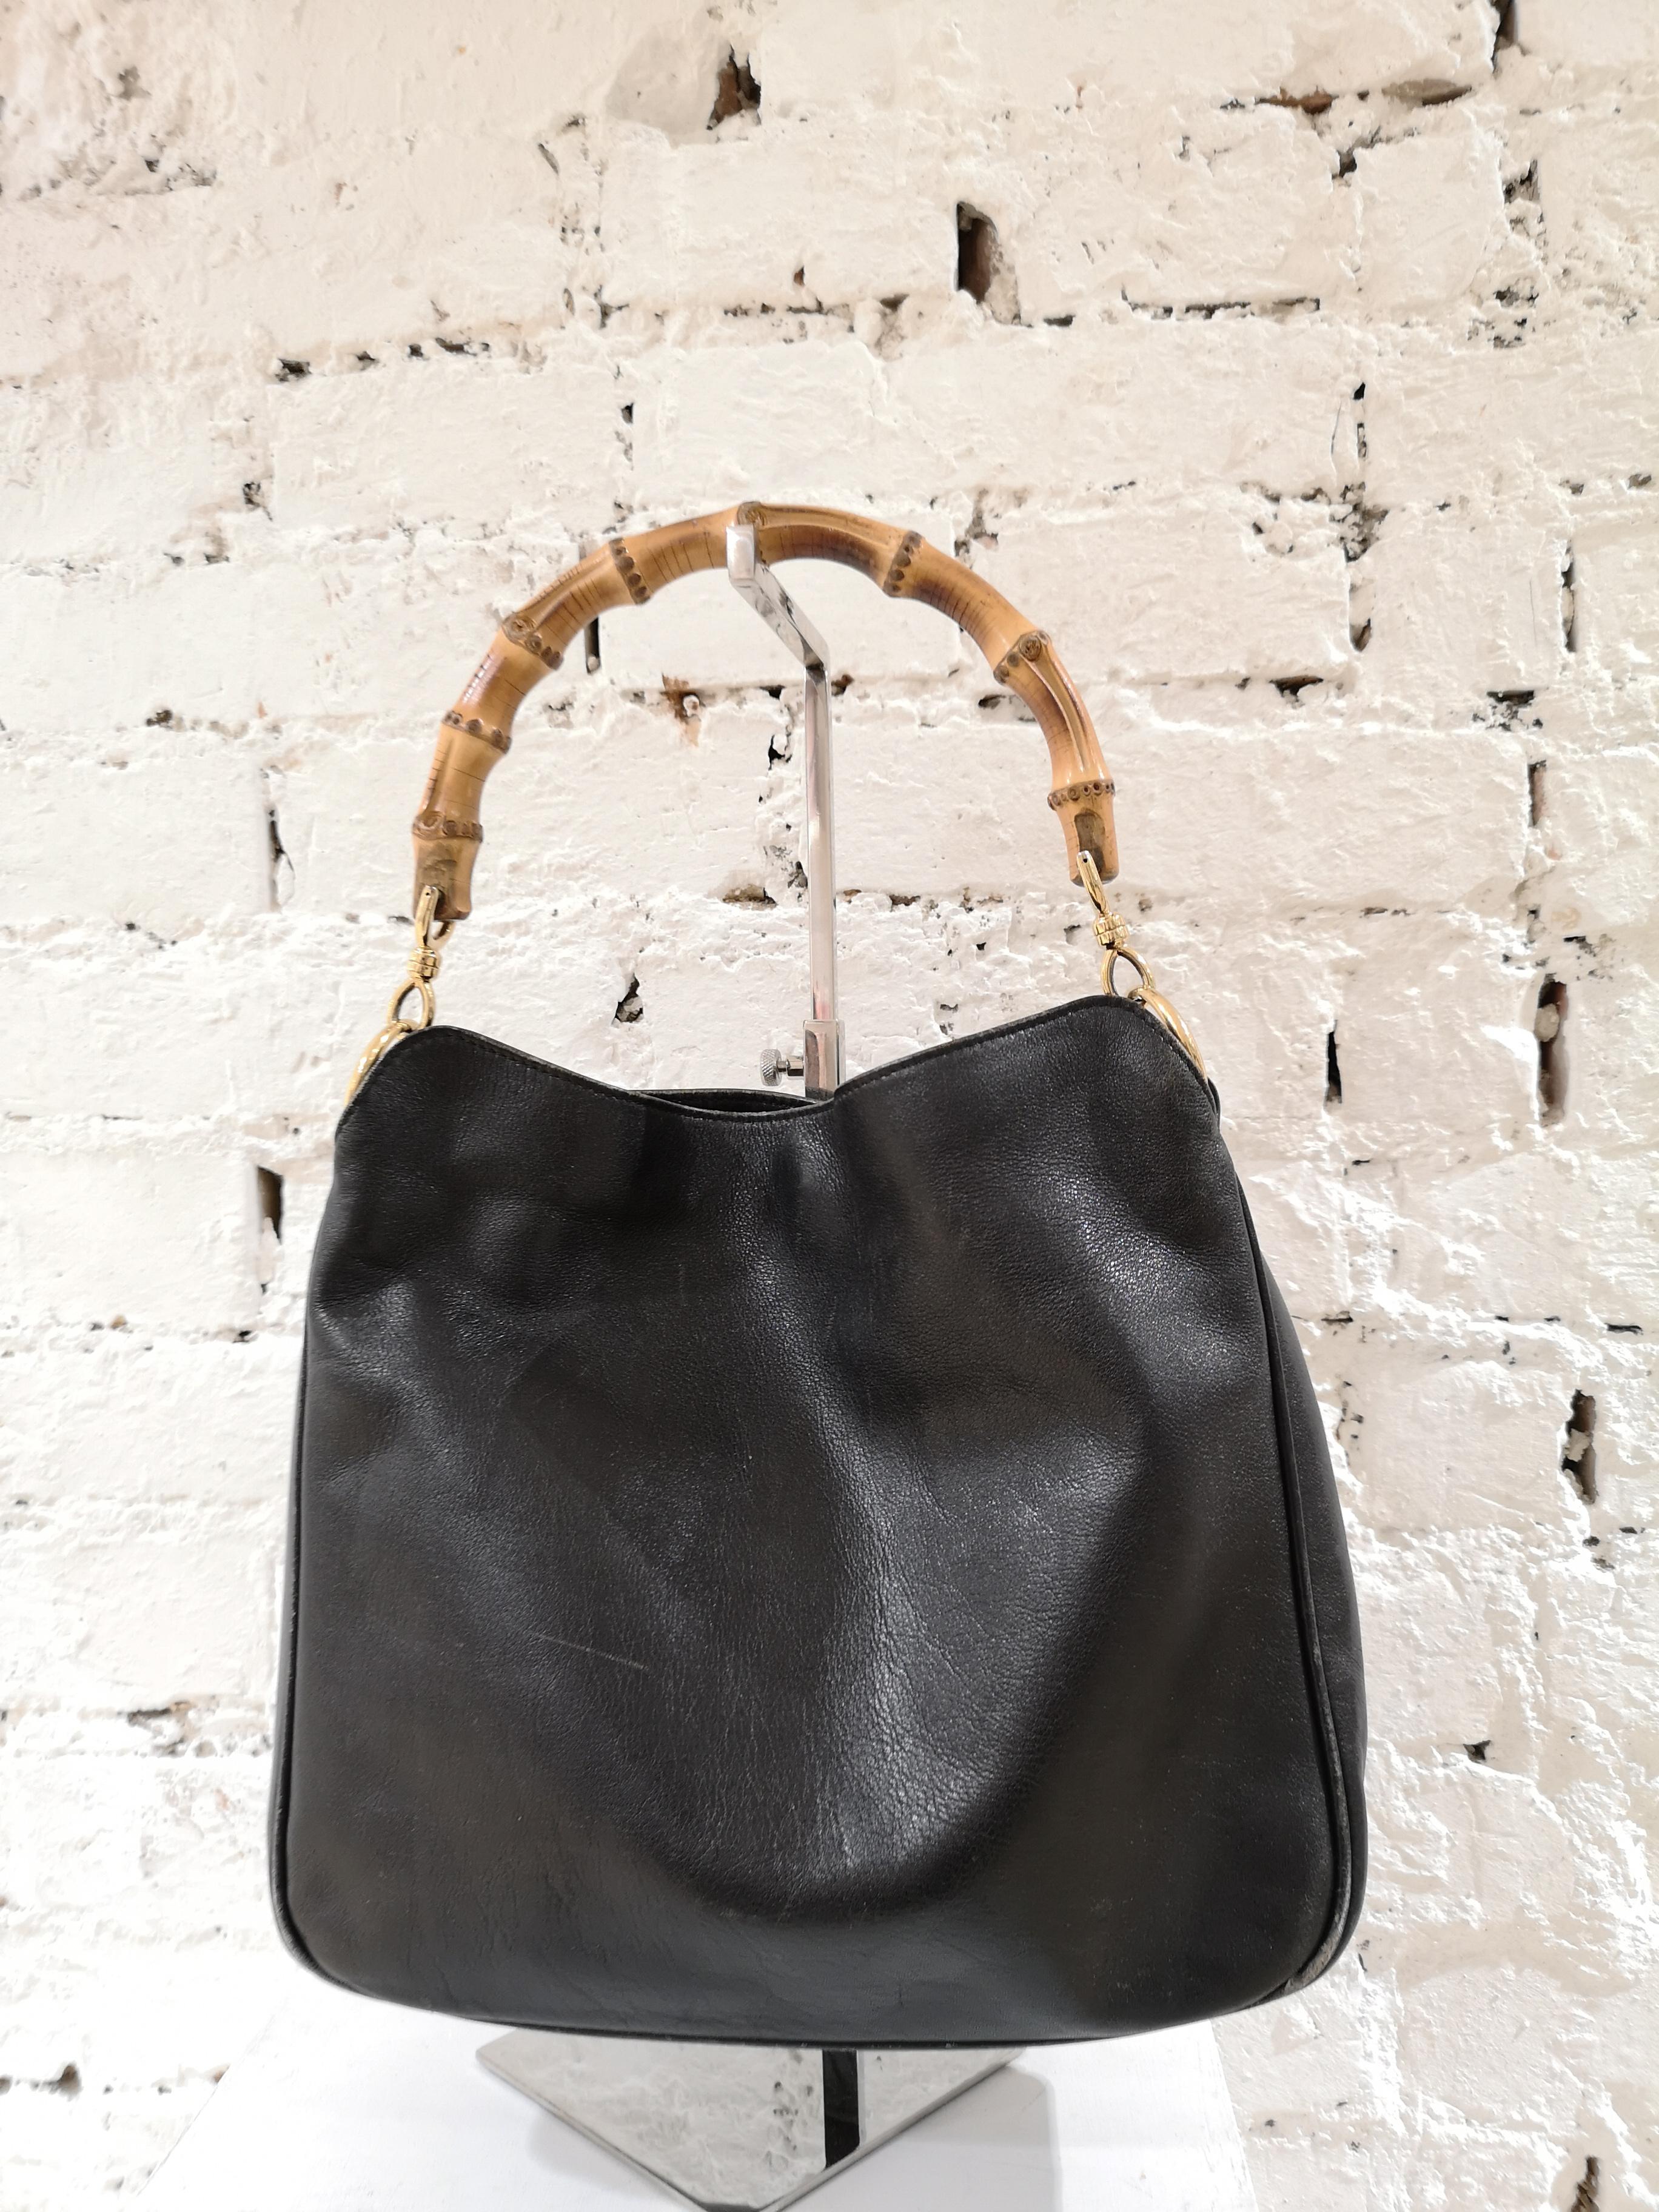 gucci black leather satchel